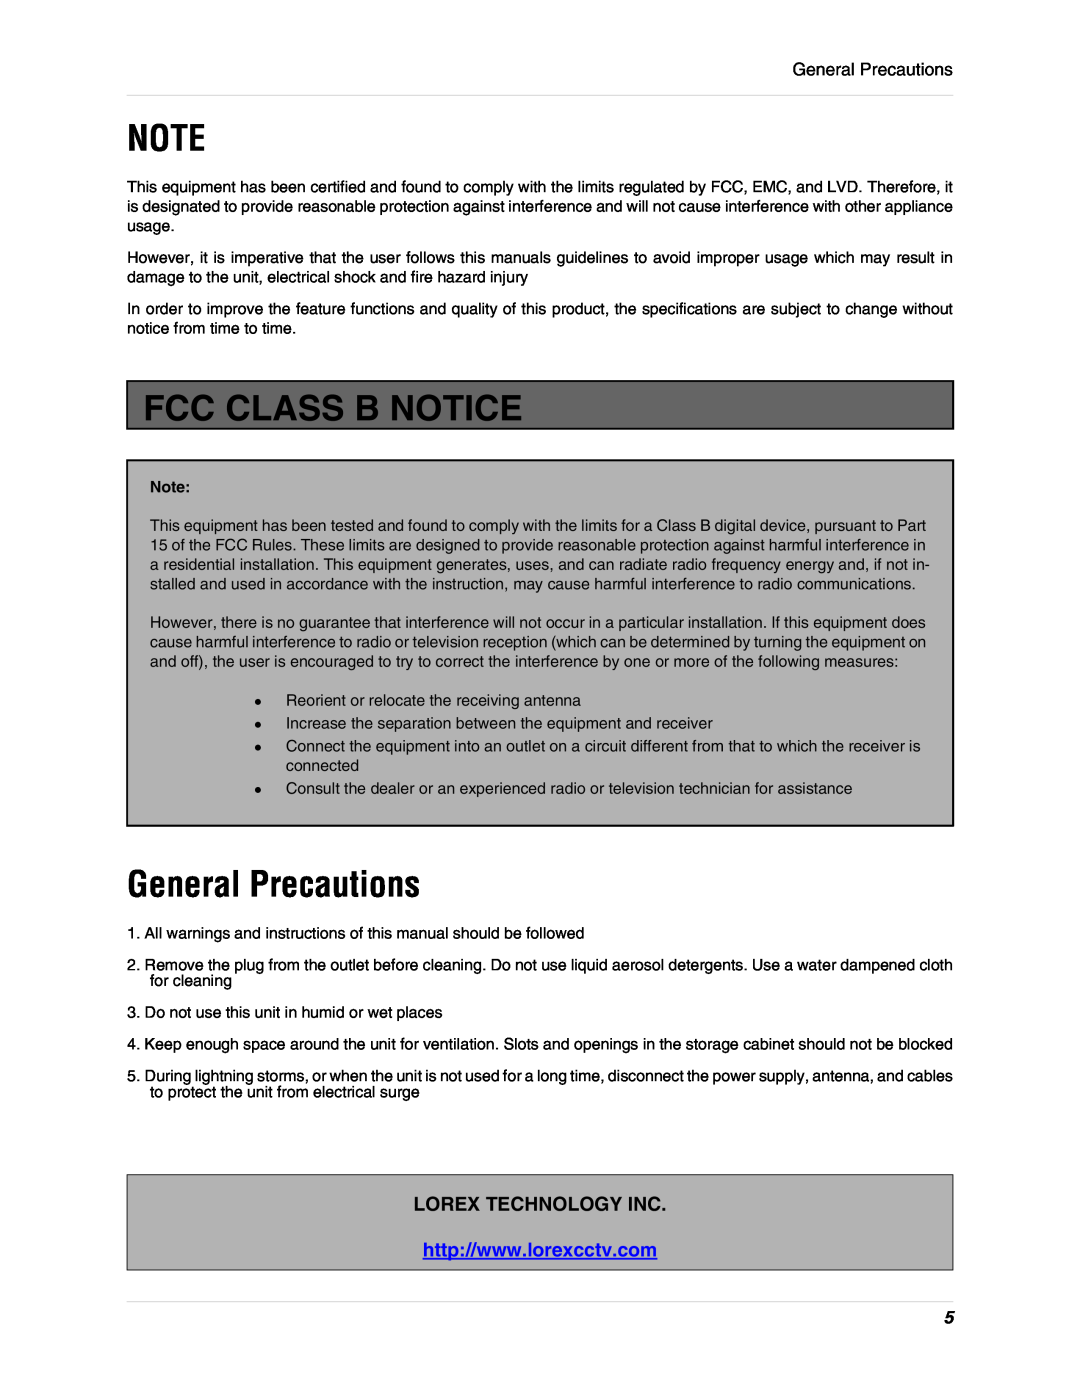 LOREX Technology L15D400 instruction manual Fcc Class B Notice, General Precautions, Lorex Technology Inc 